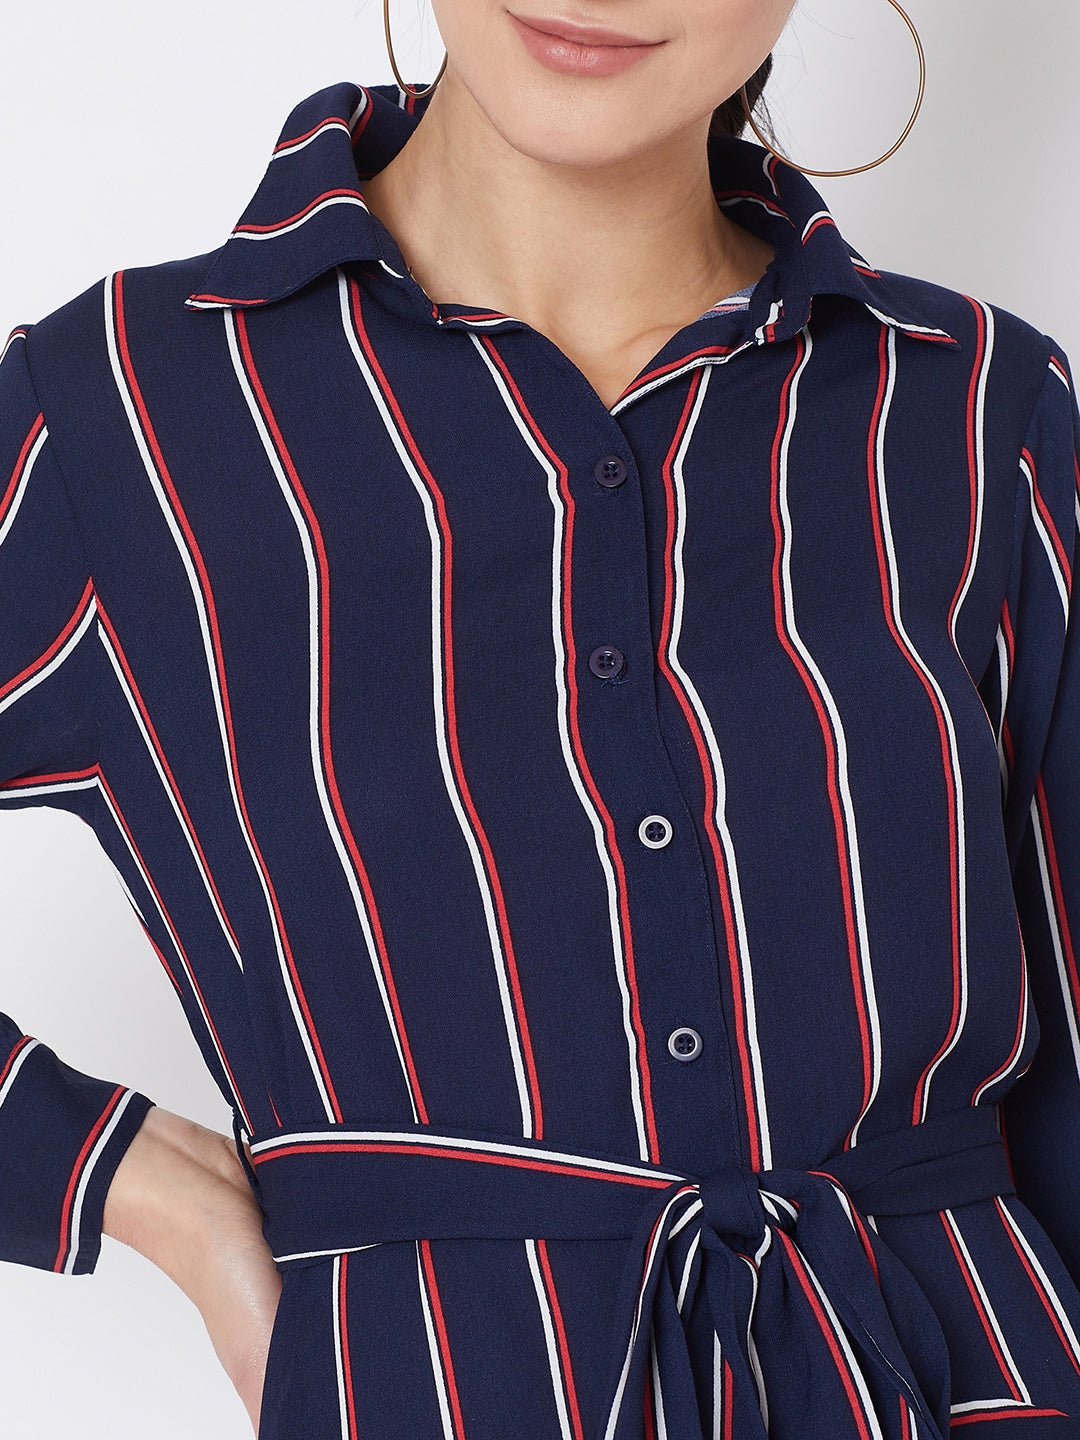 Berrylush Women Navy Blue & Red Striped Printed Collar Neck Waist Tie-Up Longline Shirt Top